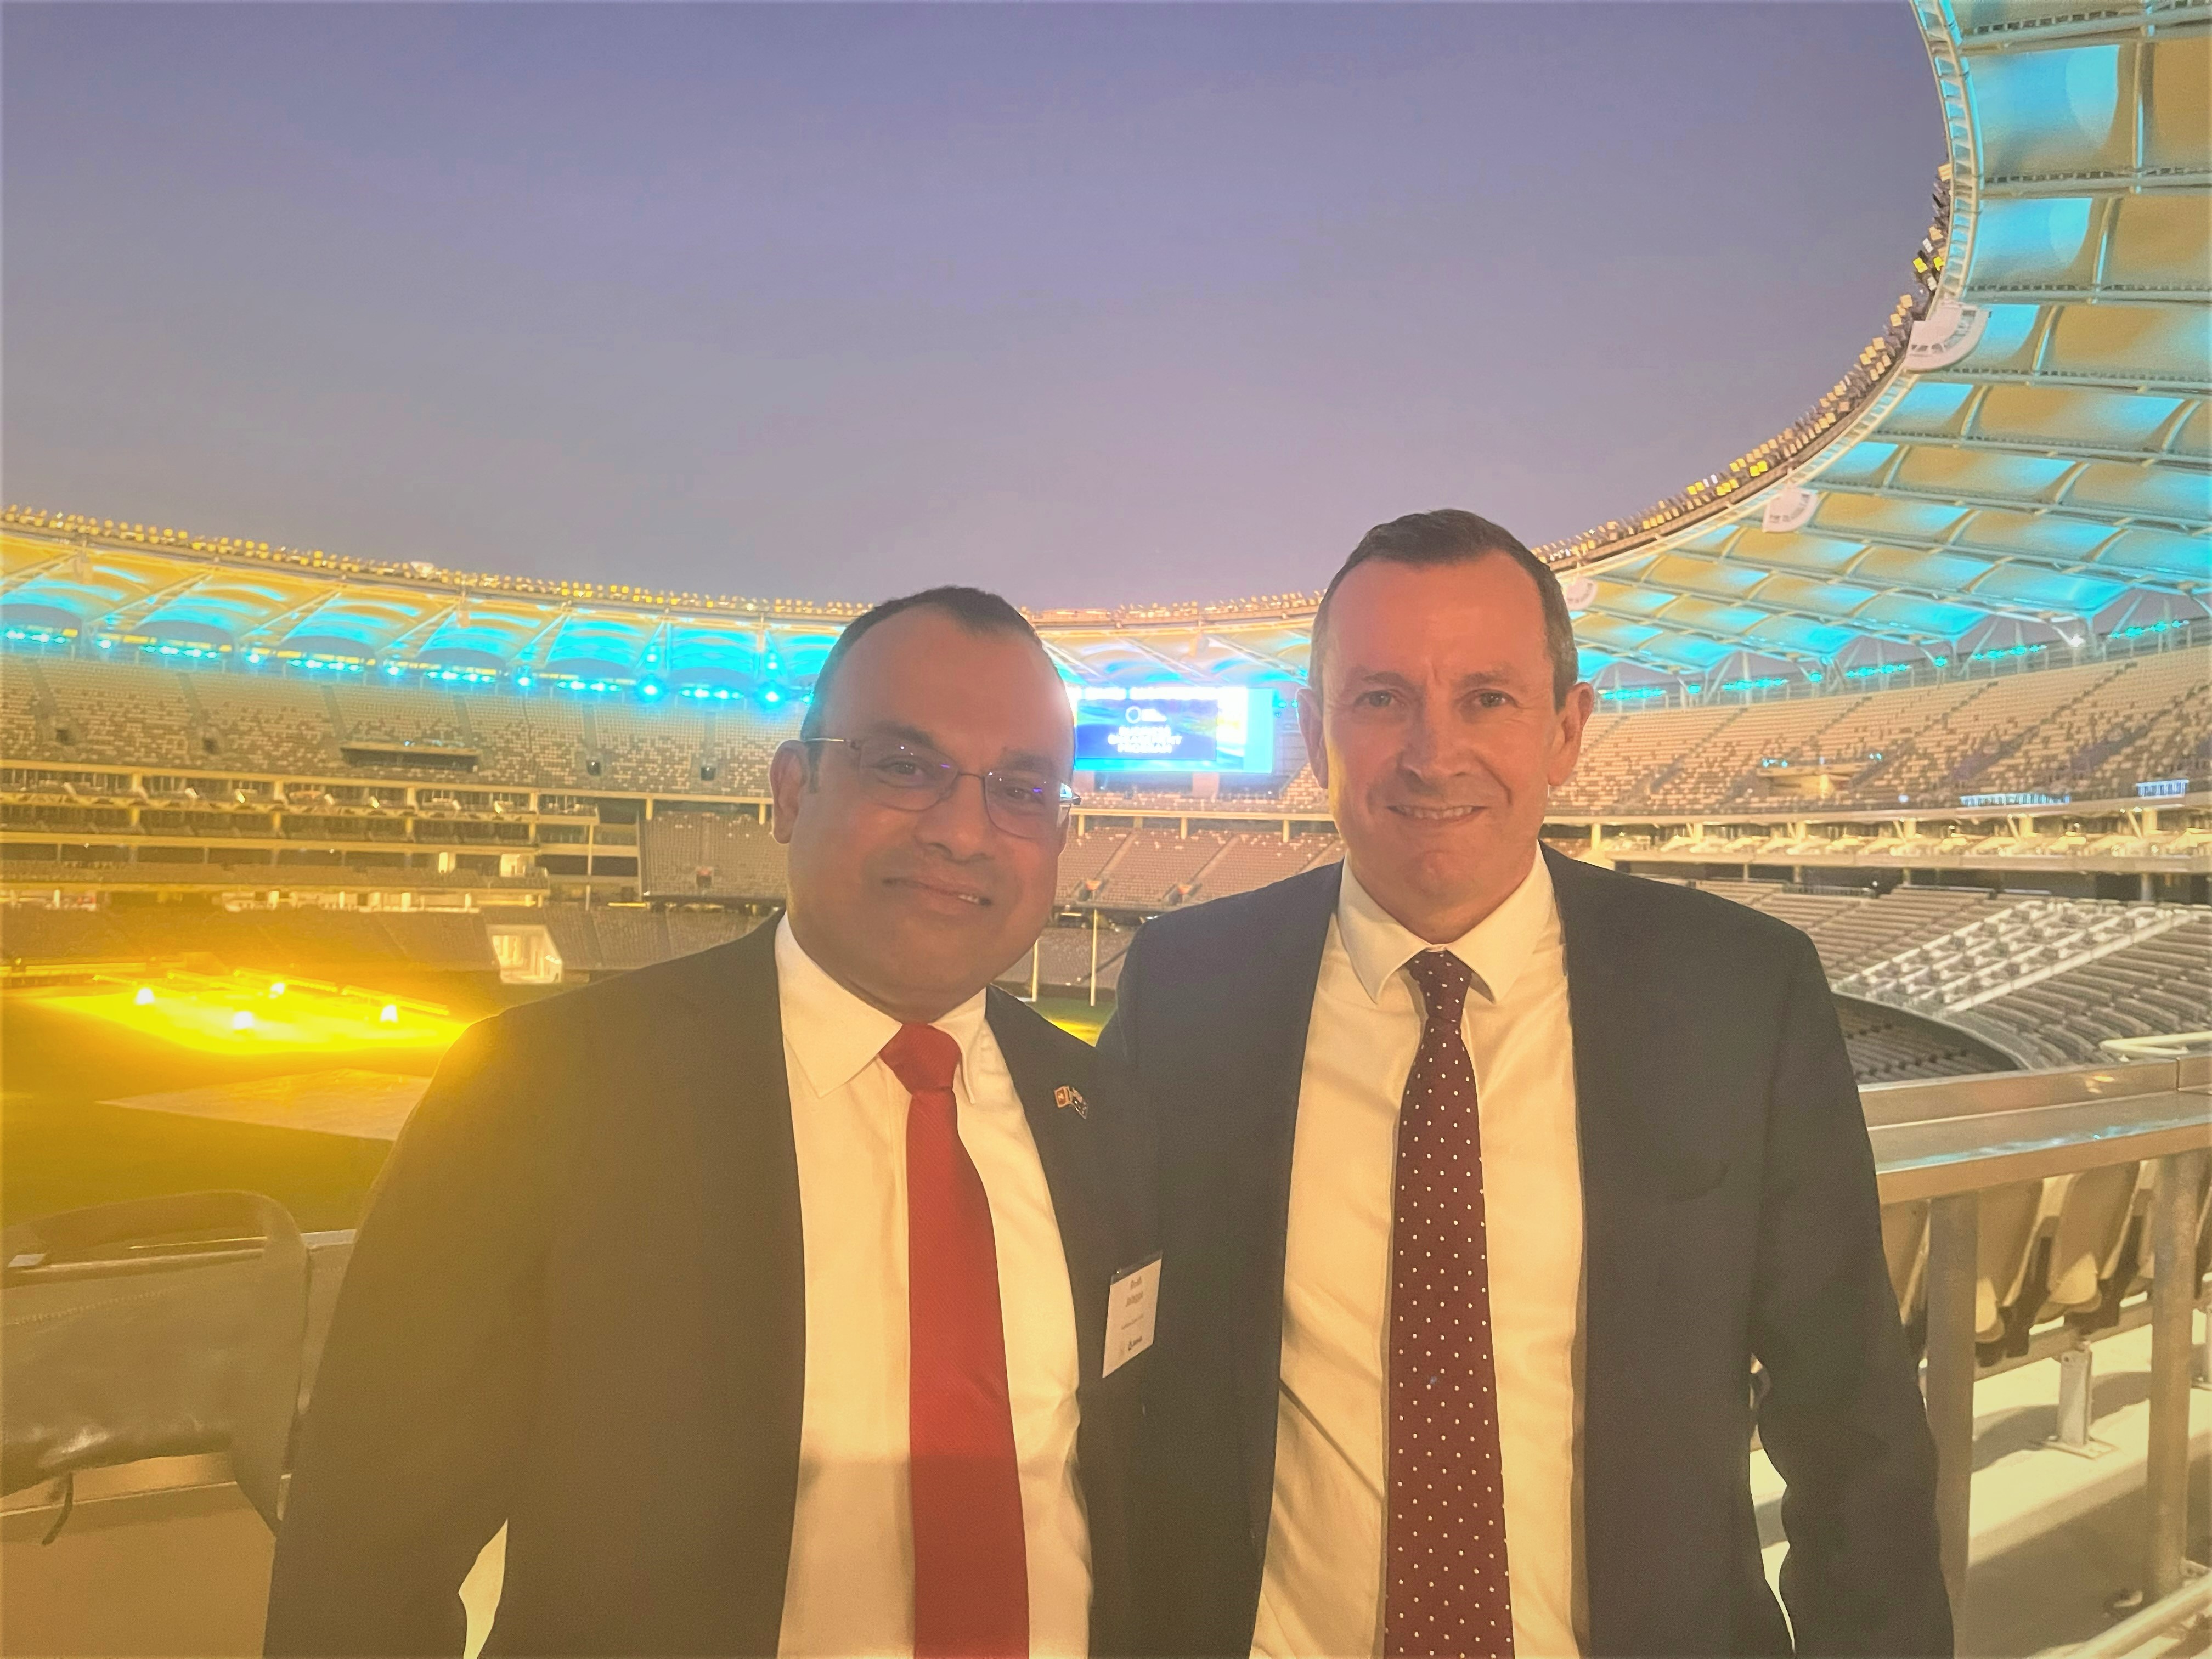 Honorary Consul Rosh Jalagge met with Western Australia’s Premier Mark McGowan last week at Optus Stadium